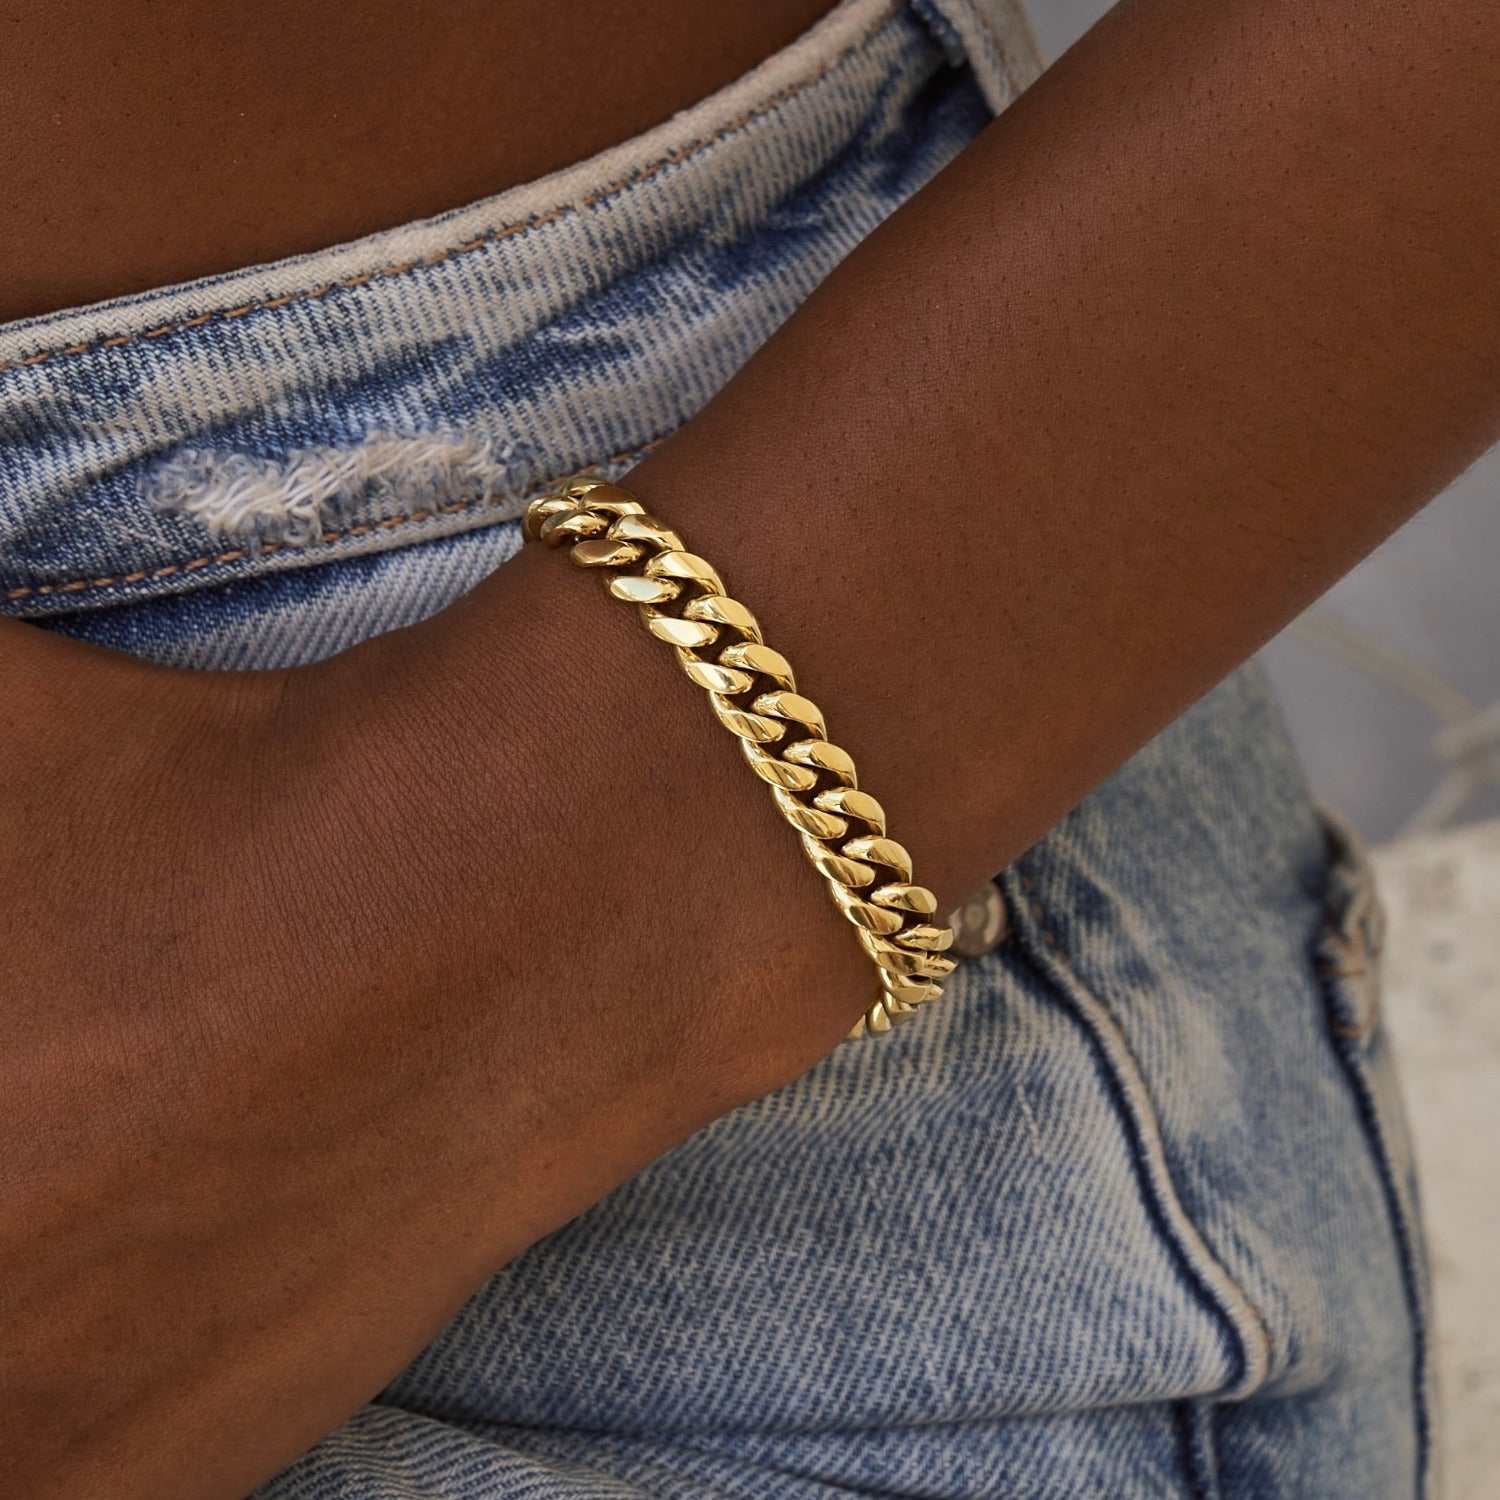 gold cuban bracelet